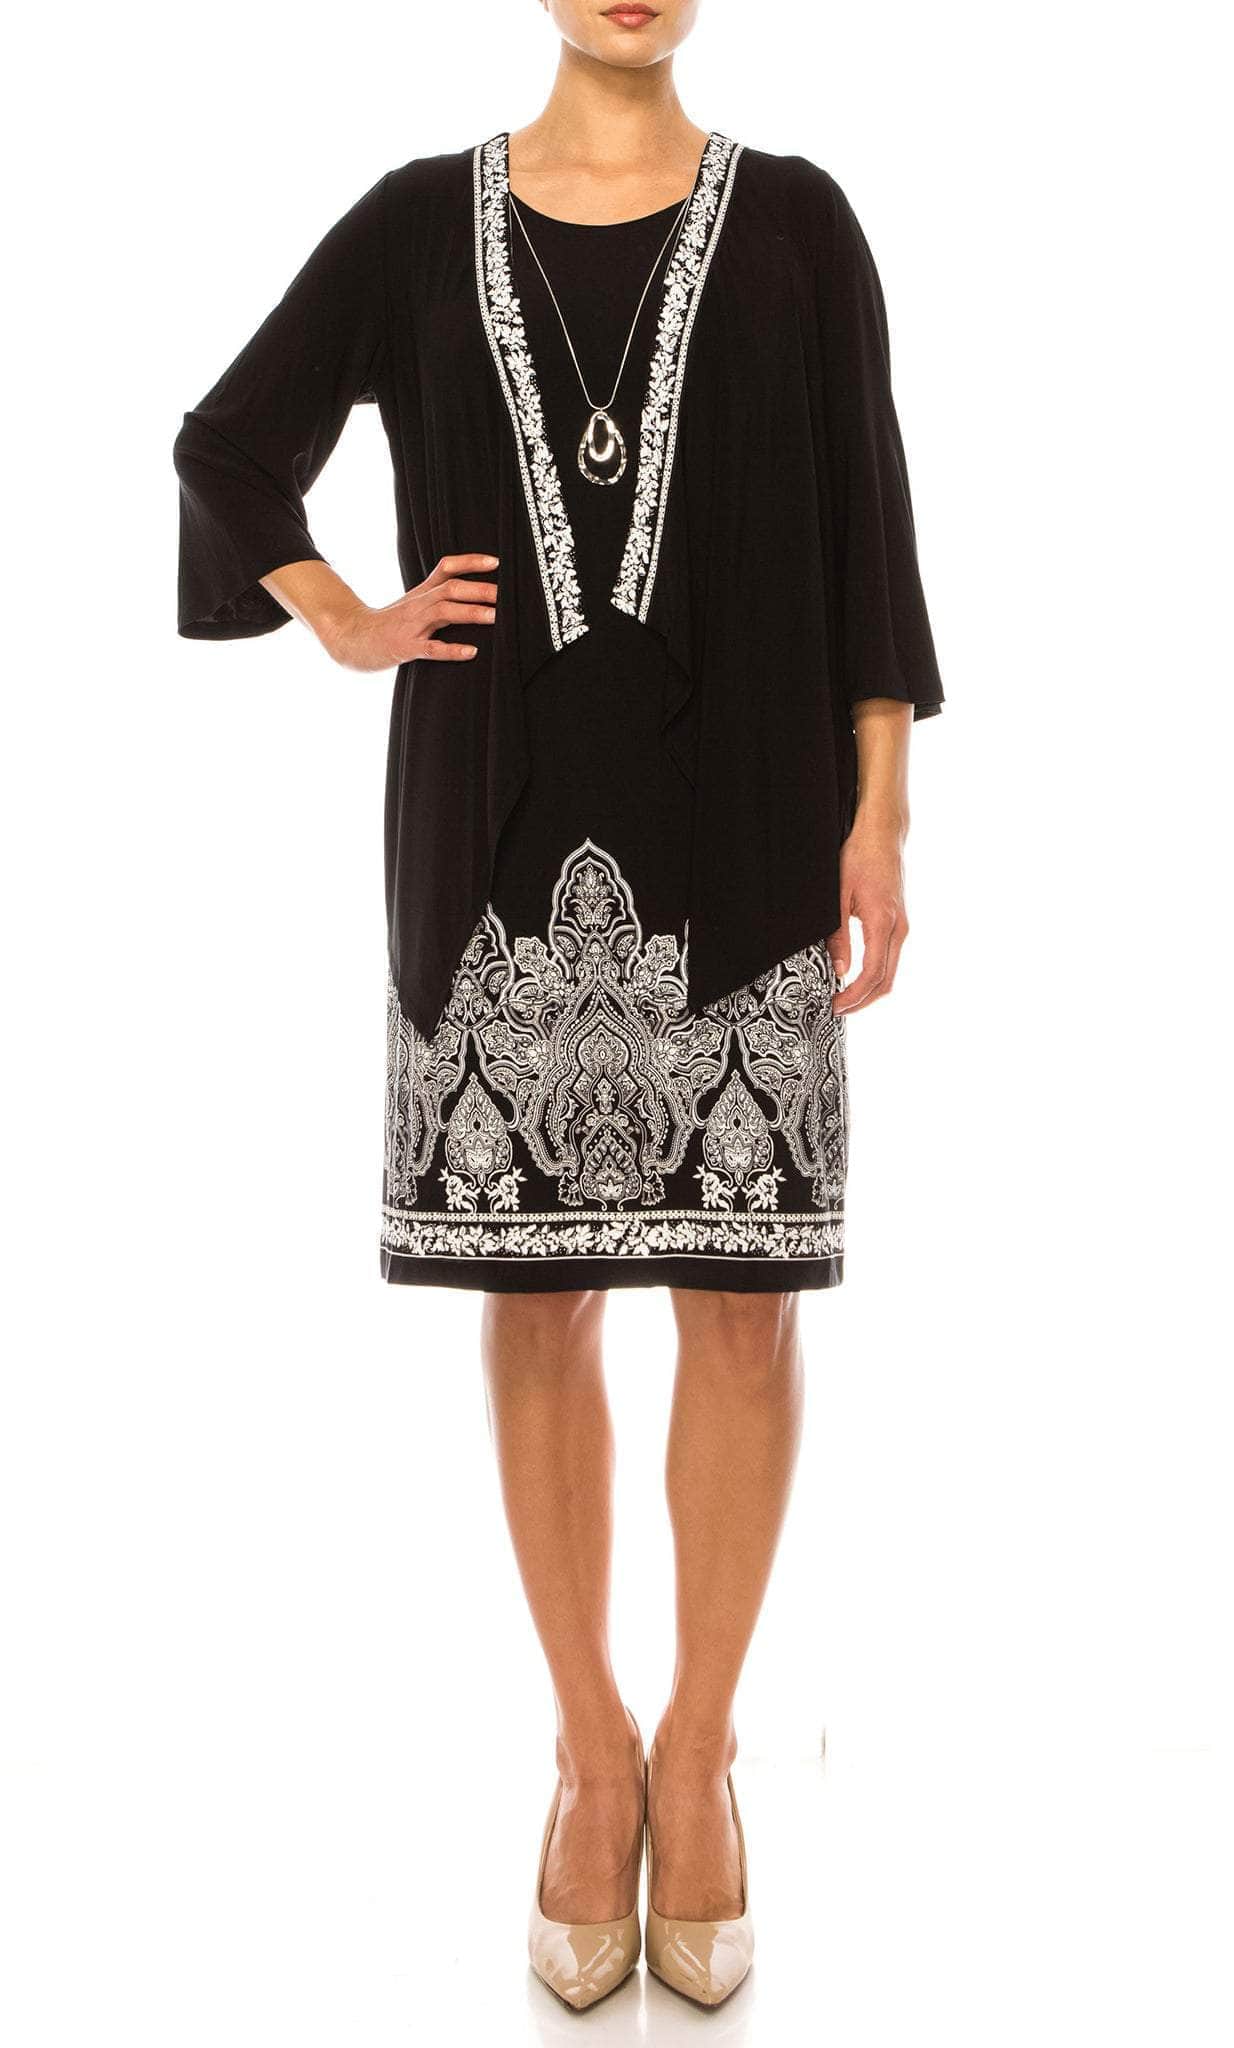 Sandra Darren 76041 - Tribal Print Long Sleeve Short Dress
